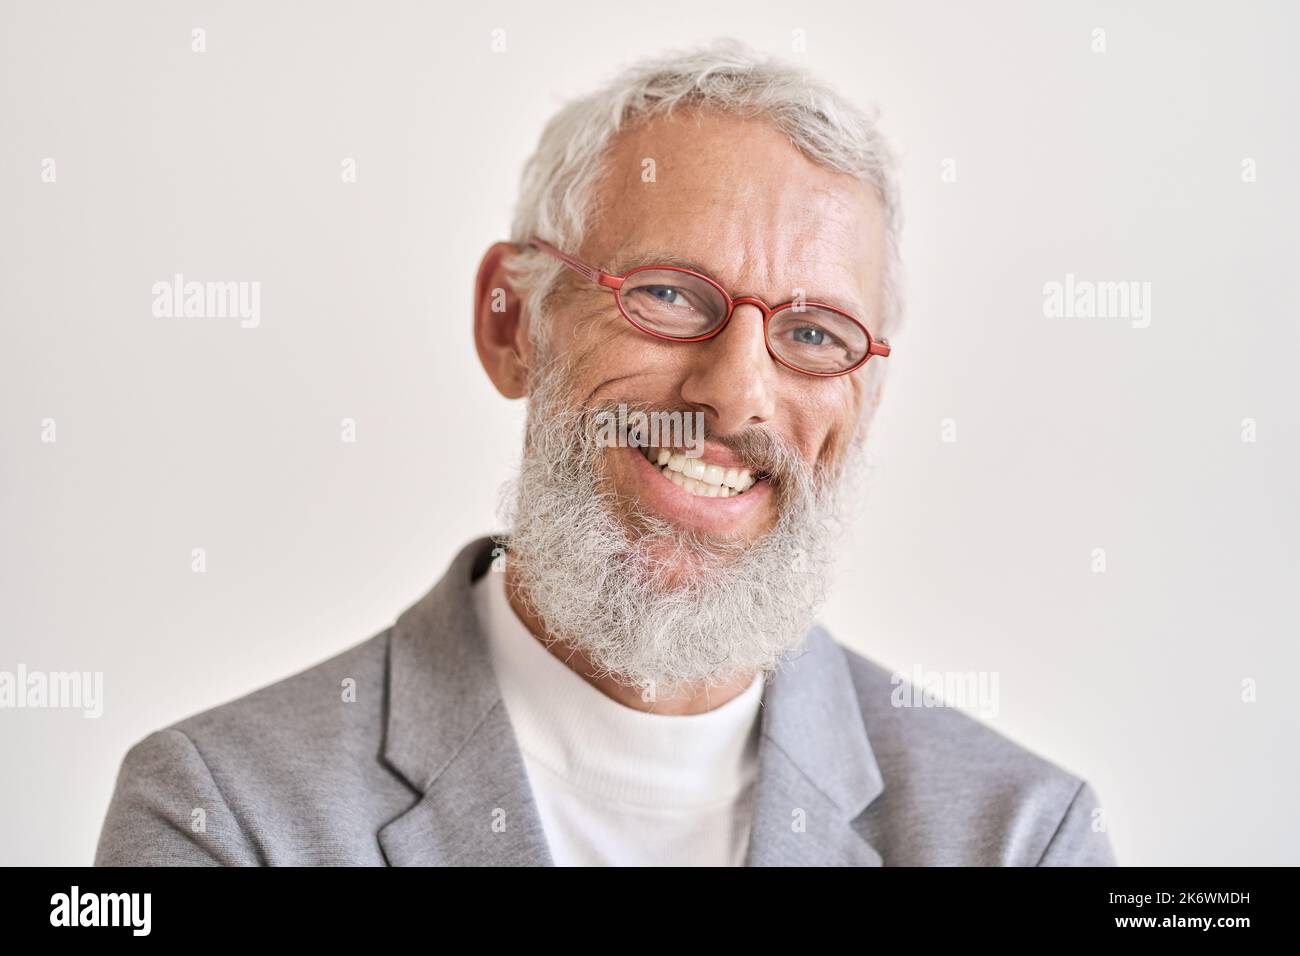 Happy older business man wearing glasses isolated on white, headshot portrait. Stock Photo